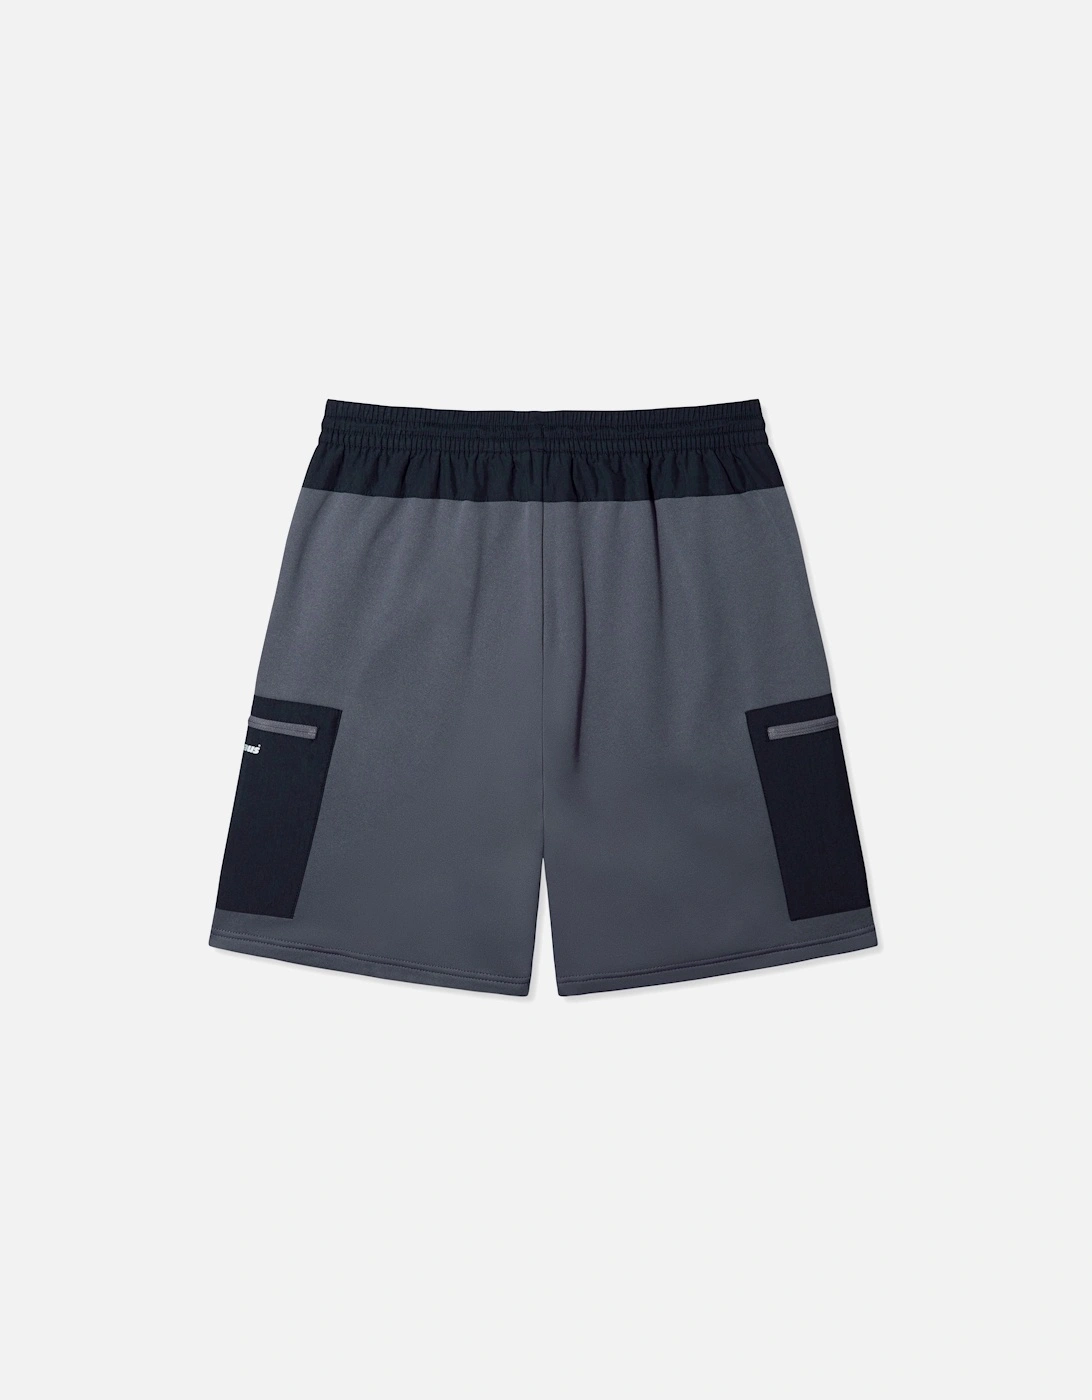 Mens Reacon Shorts (Grey)